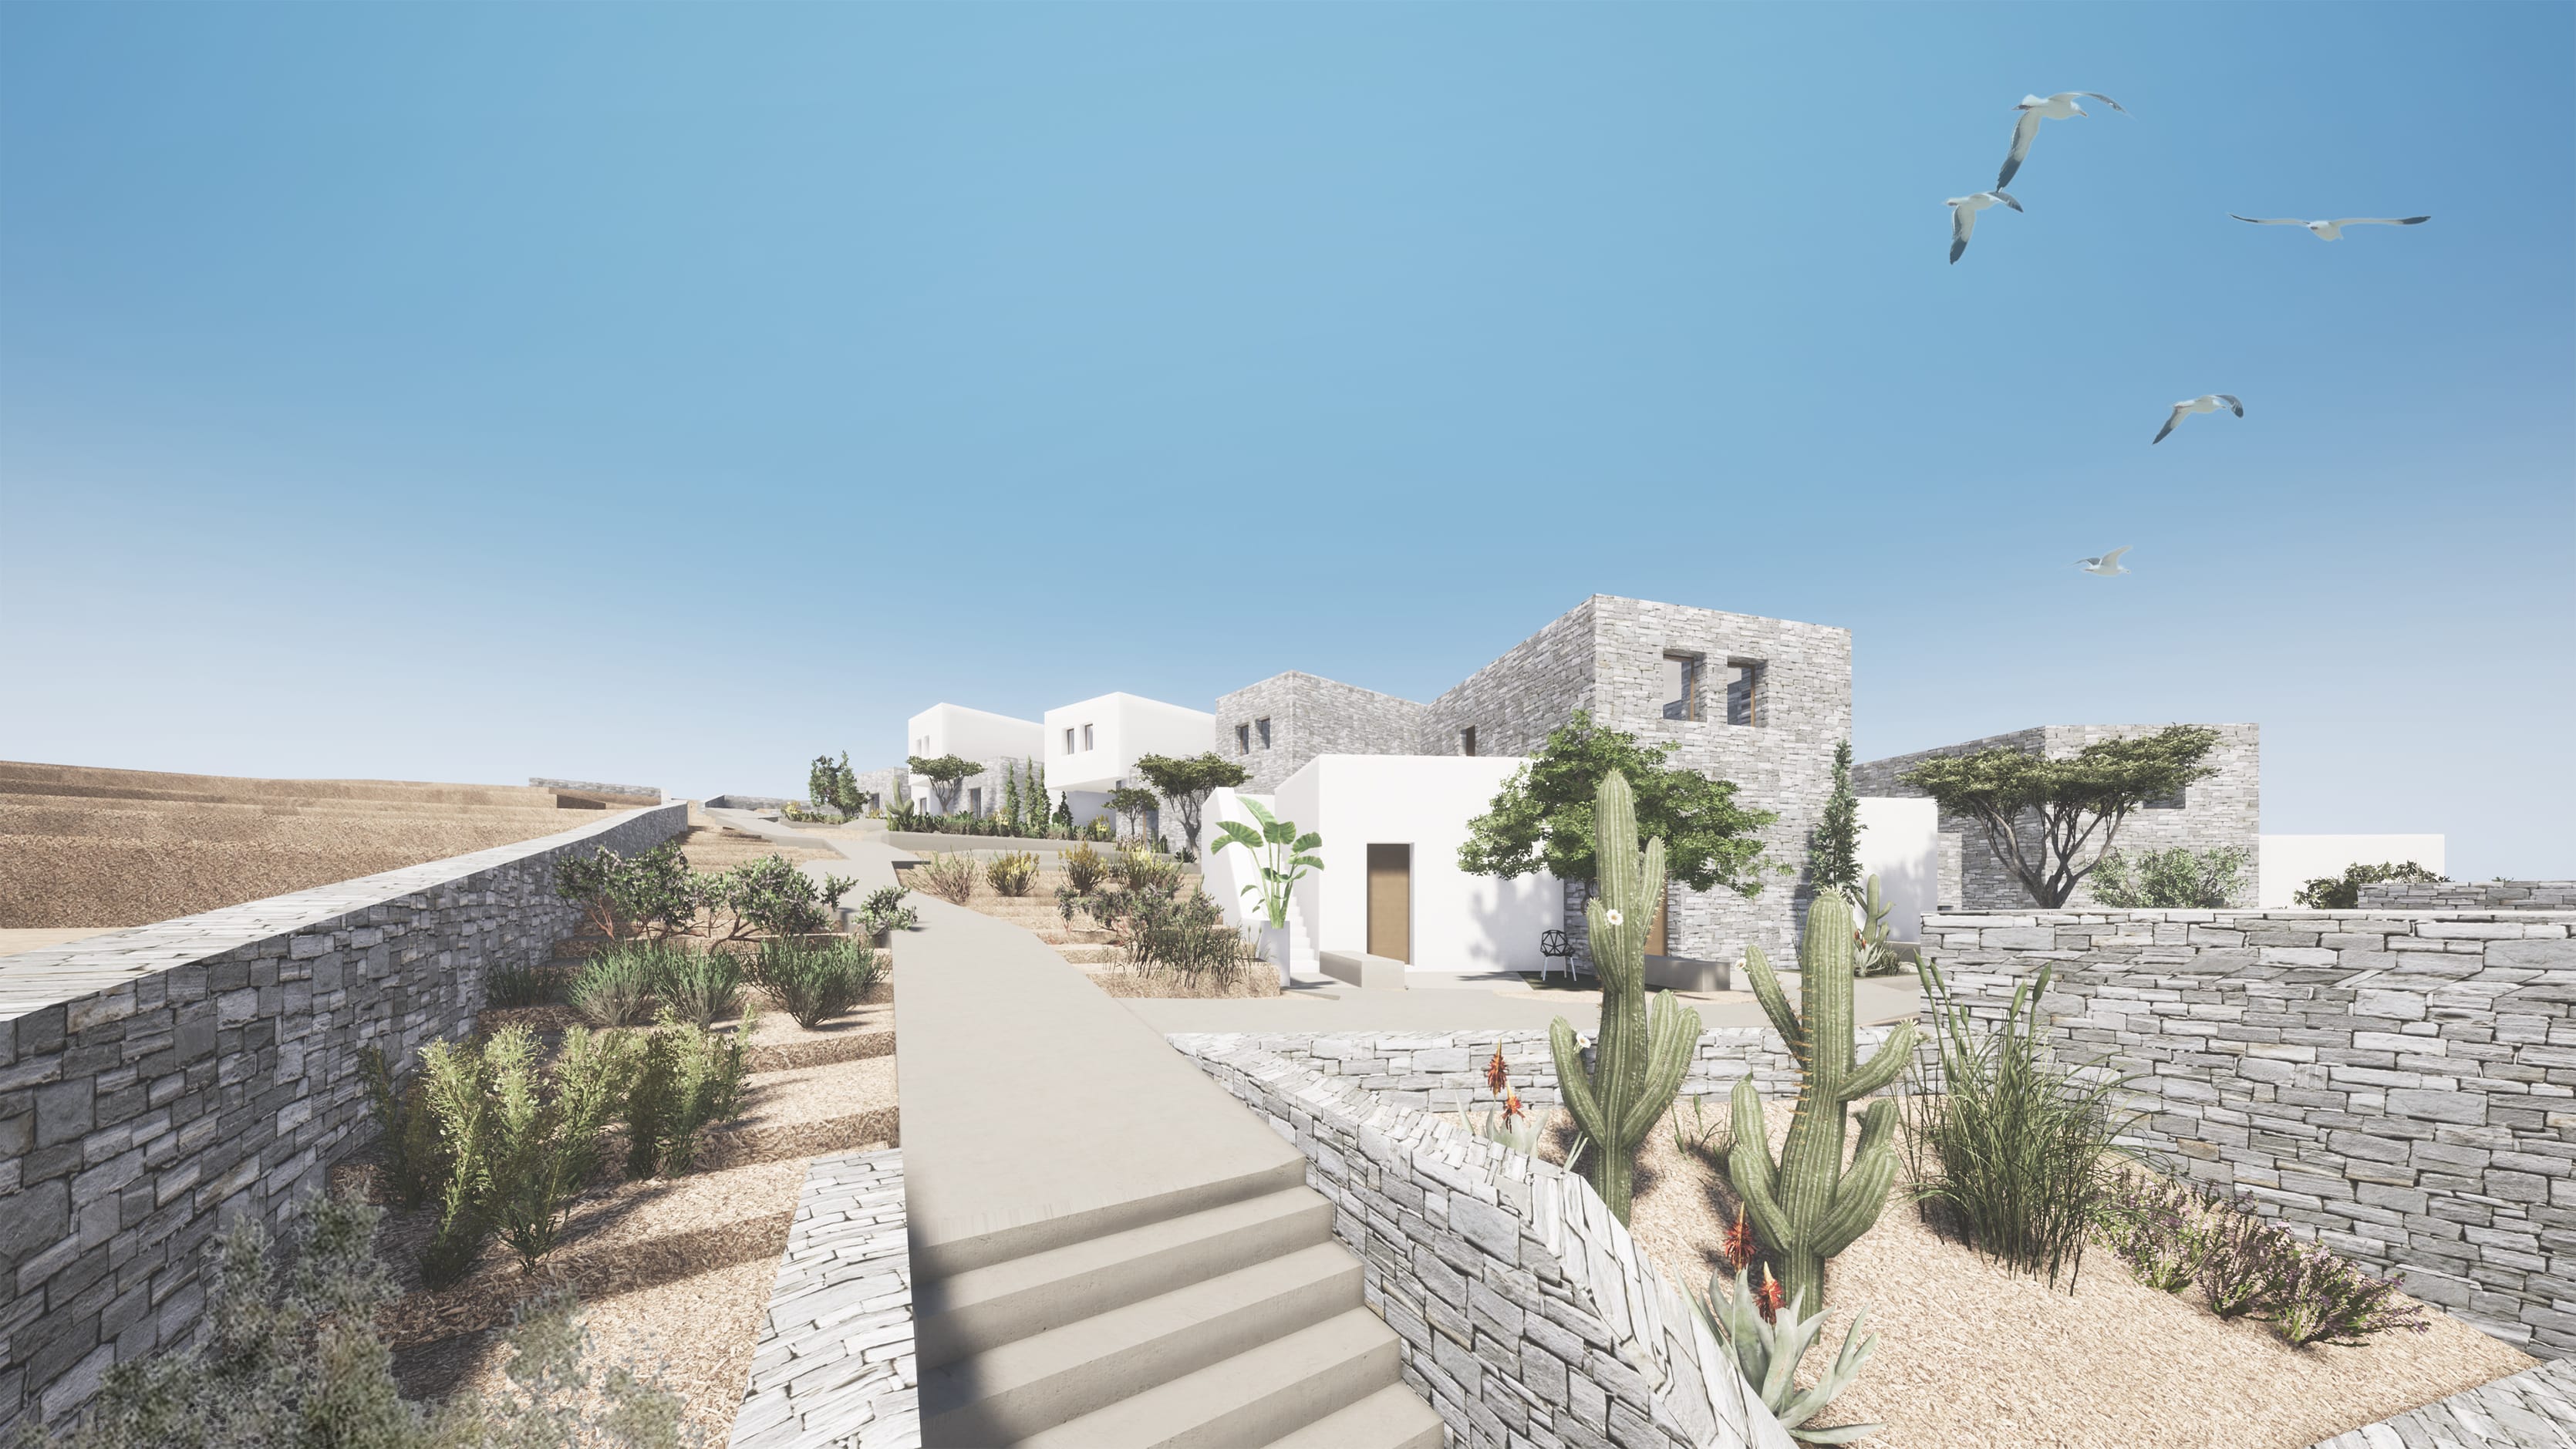 Evripiotis Architects--Syris Luxury Hotel, Mykonos Island